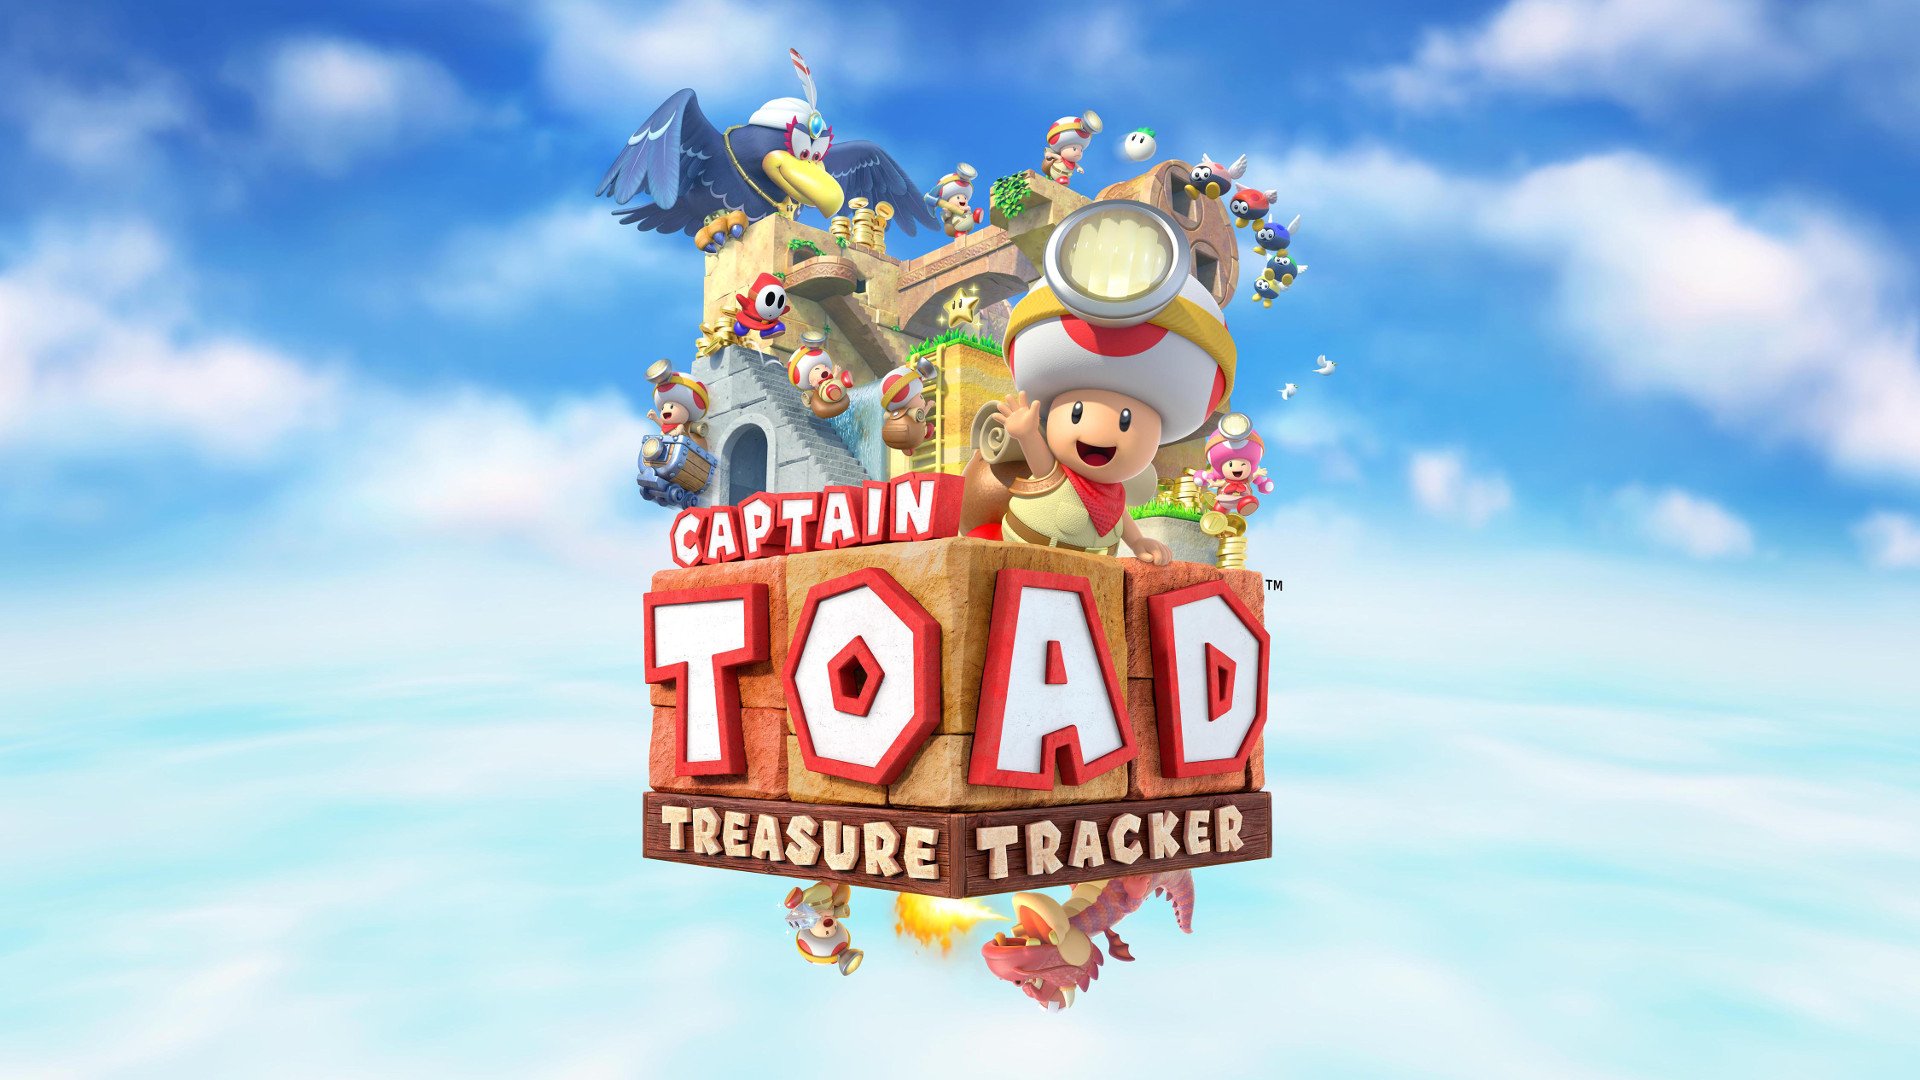 Captain Toad Treasure Tracker HD Wallpaper Background Image